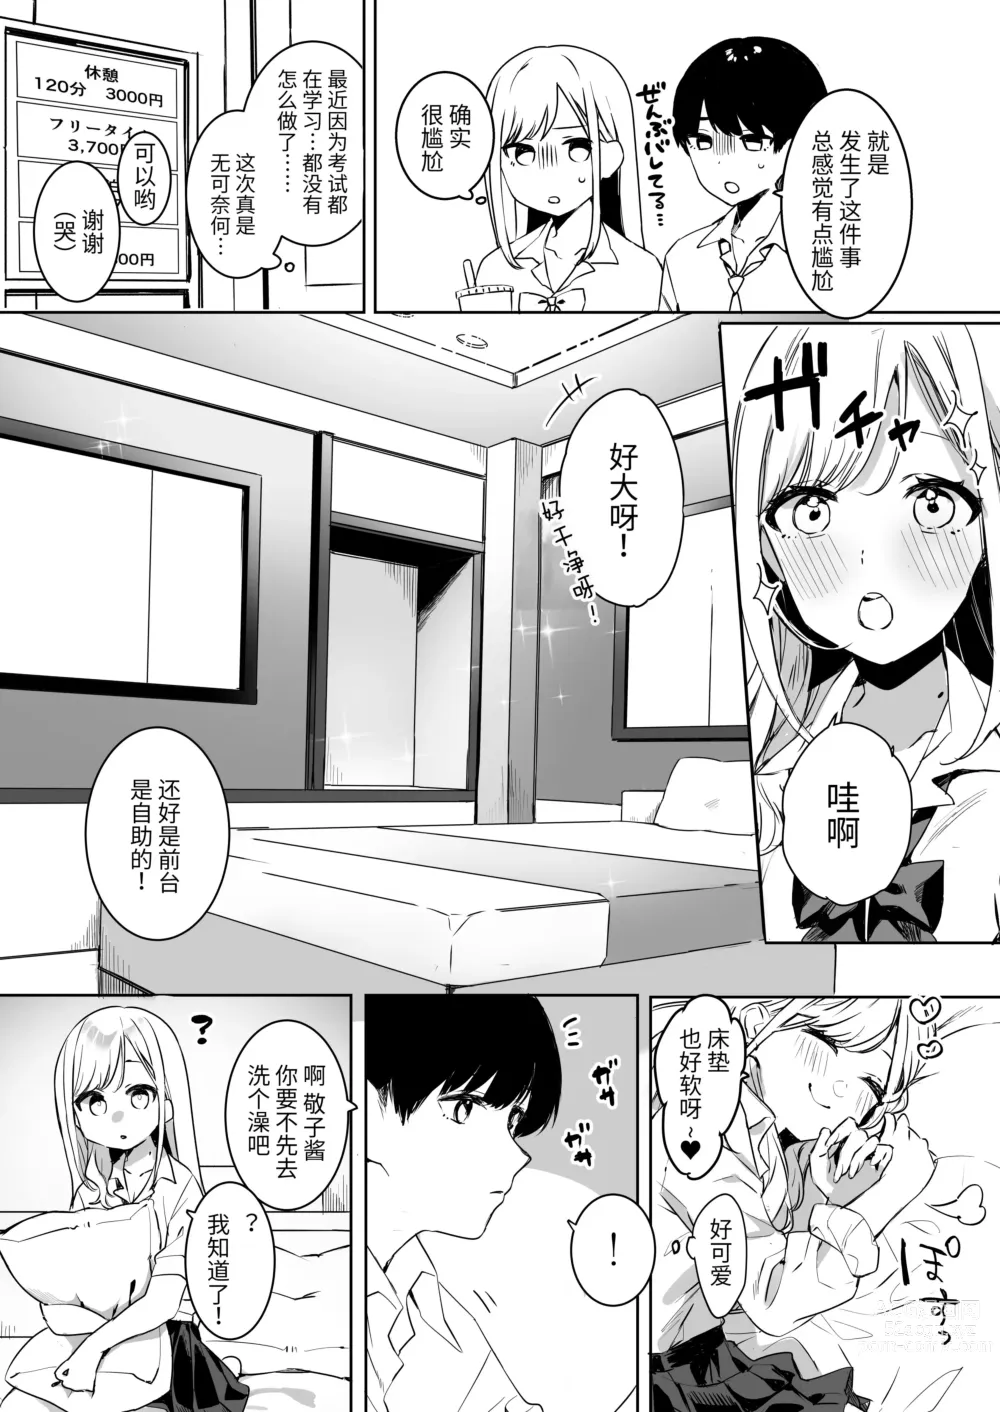 Page 6 of doujinshi 頼み込めばコスプレえっちしてくれる幼馴染のギャル